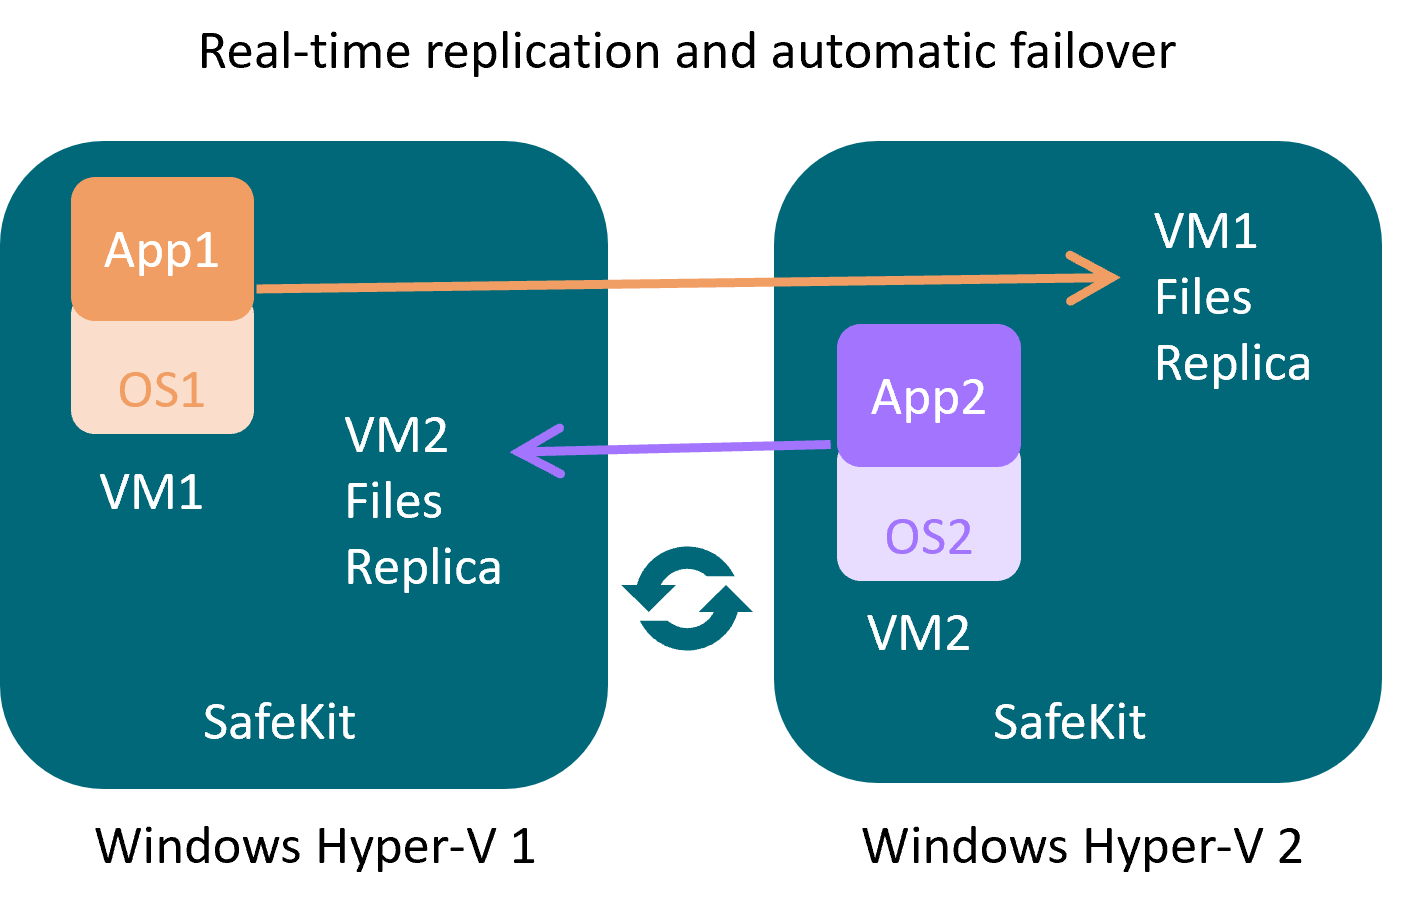 [SafeKit] A Hyper-V cluster without shared storage on a SAN